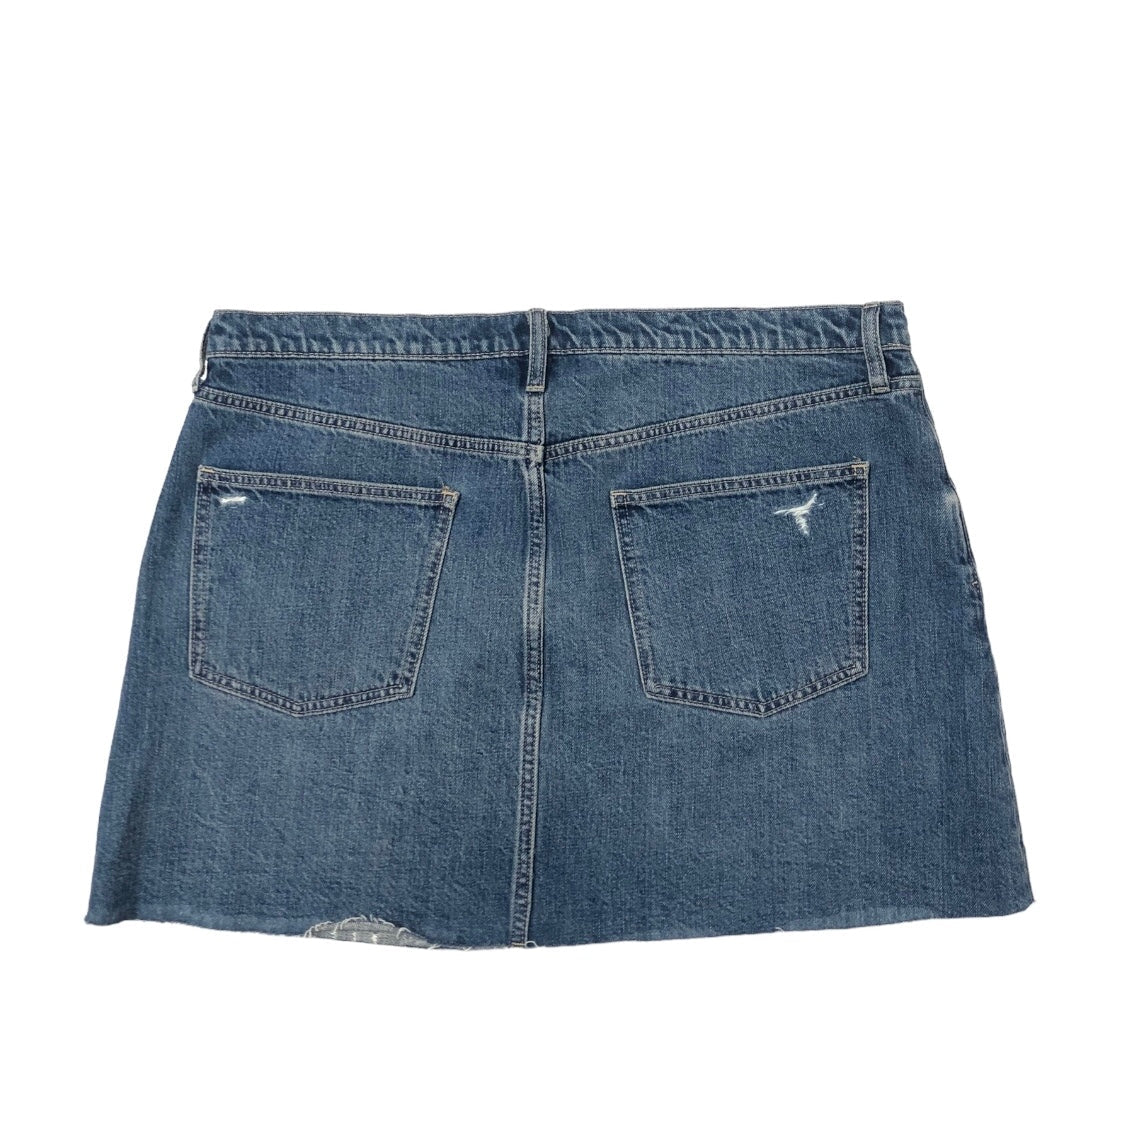 Skirt Mini & Short By Gap  Size: 16